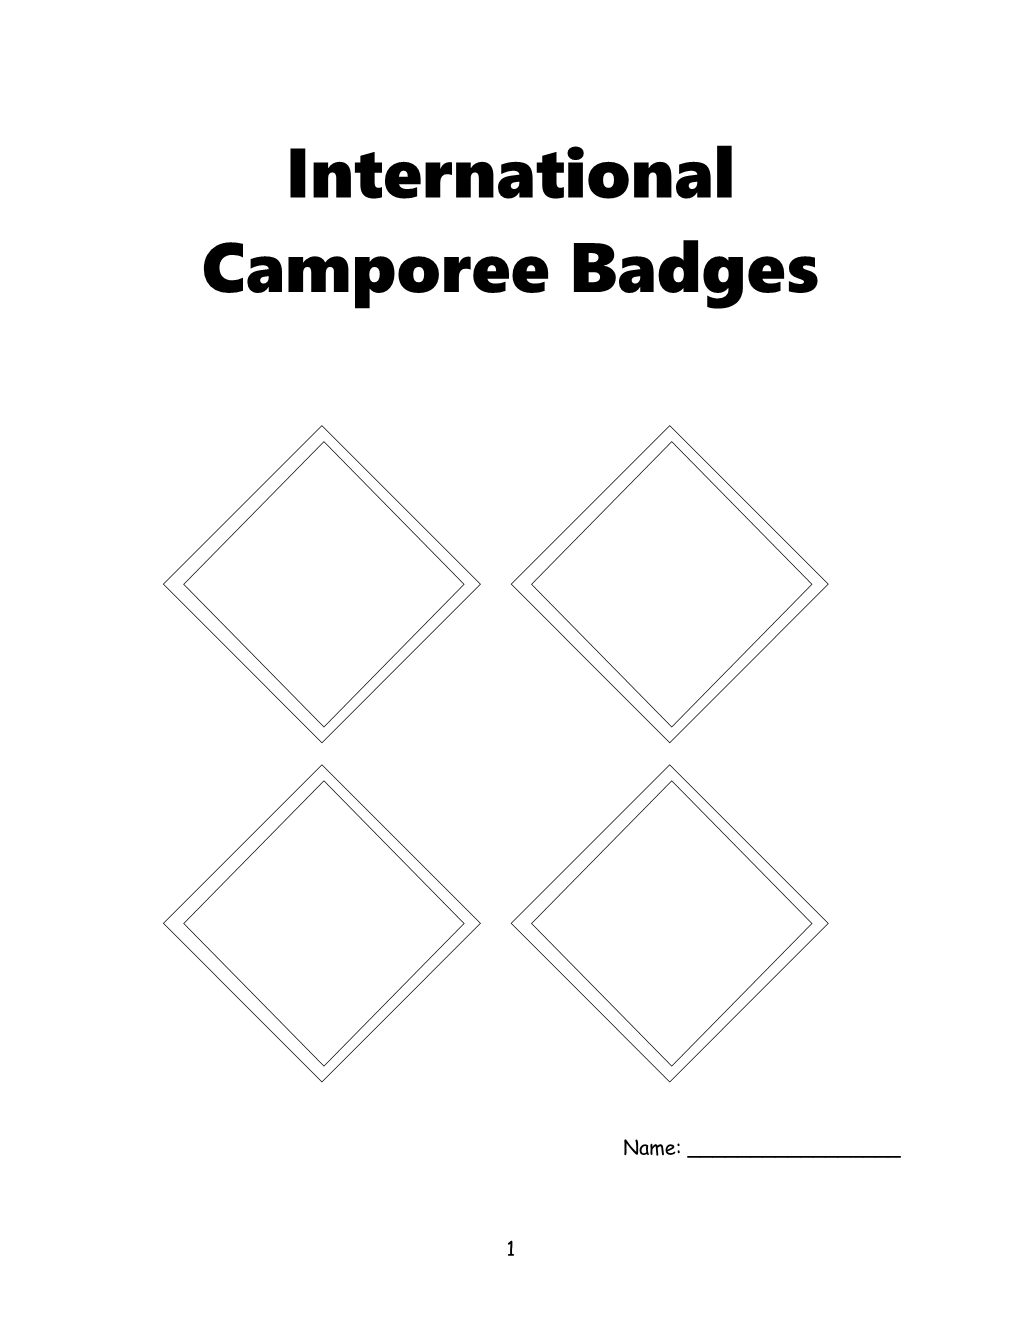 International Camporee Badges